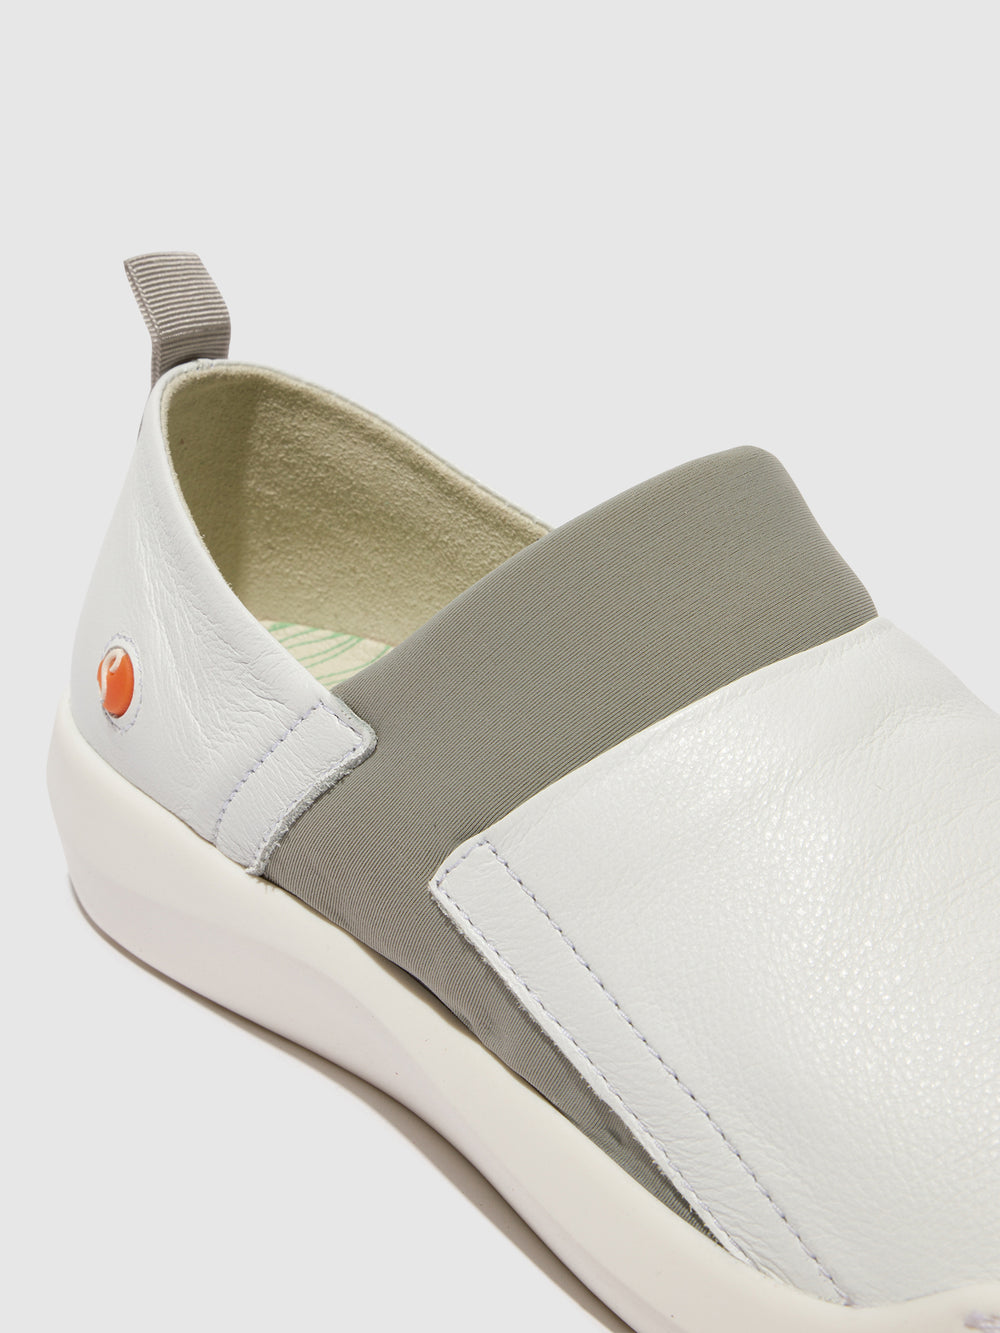 Slip-on Shoes BAJU709 WHITE/GREY